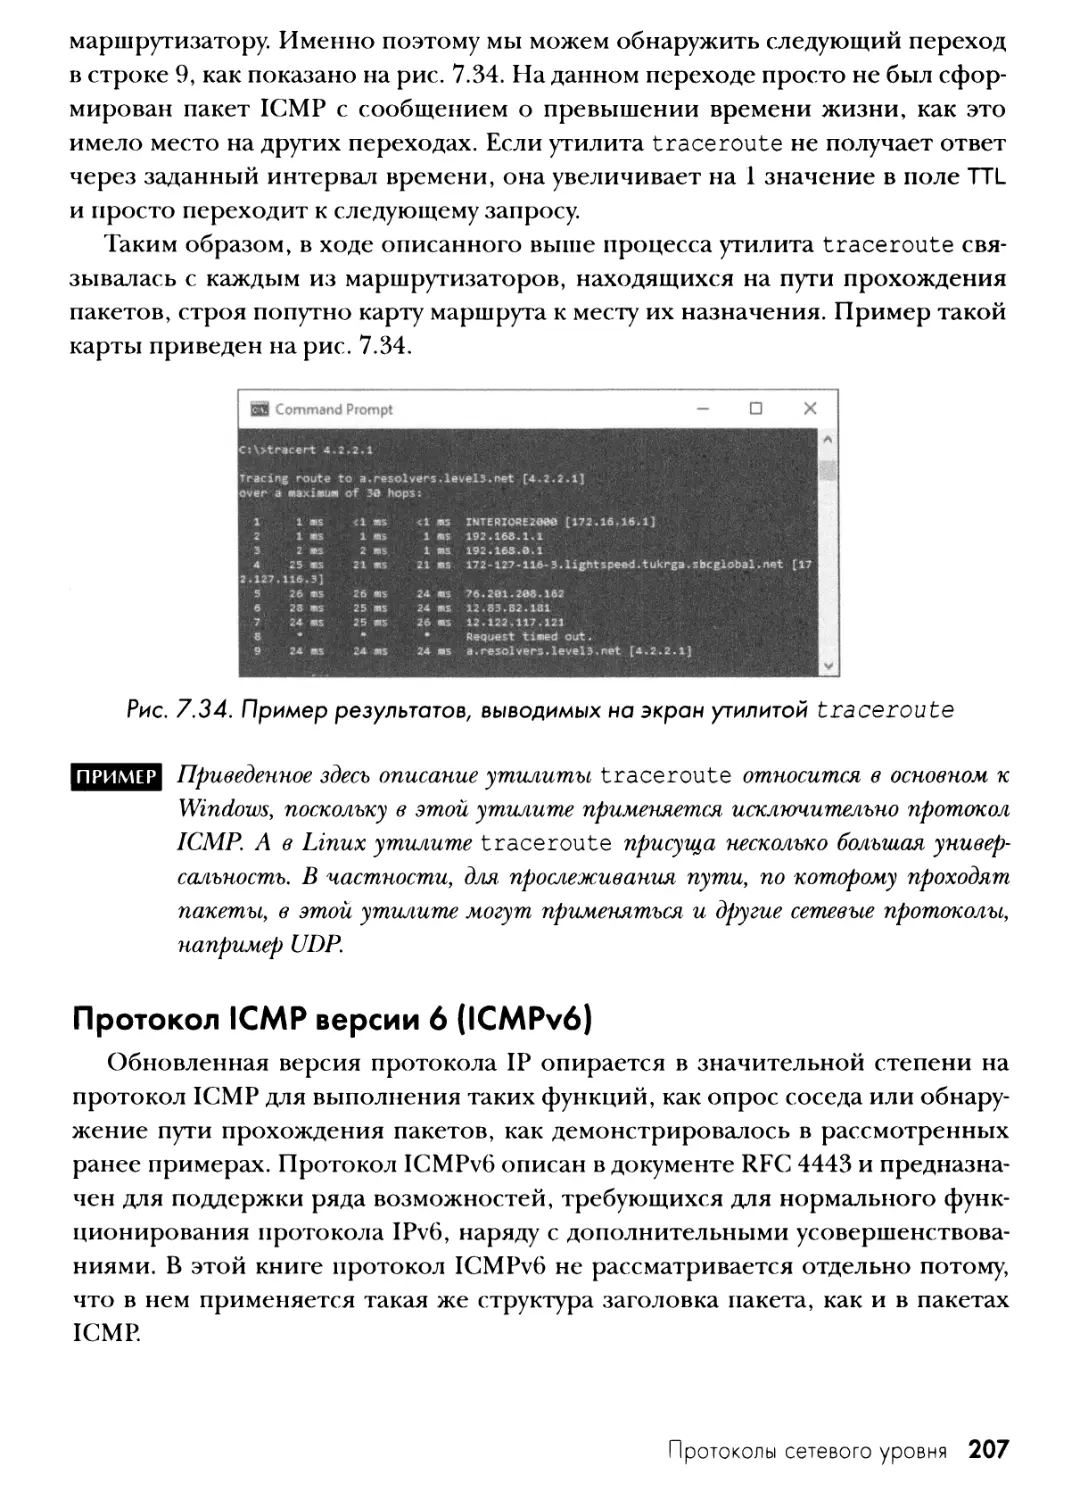 Протокол ICMP версии 6 (ICMPv6)